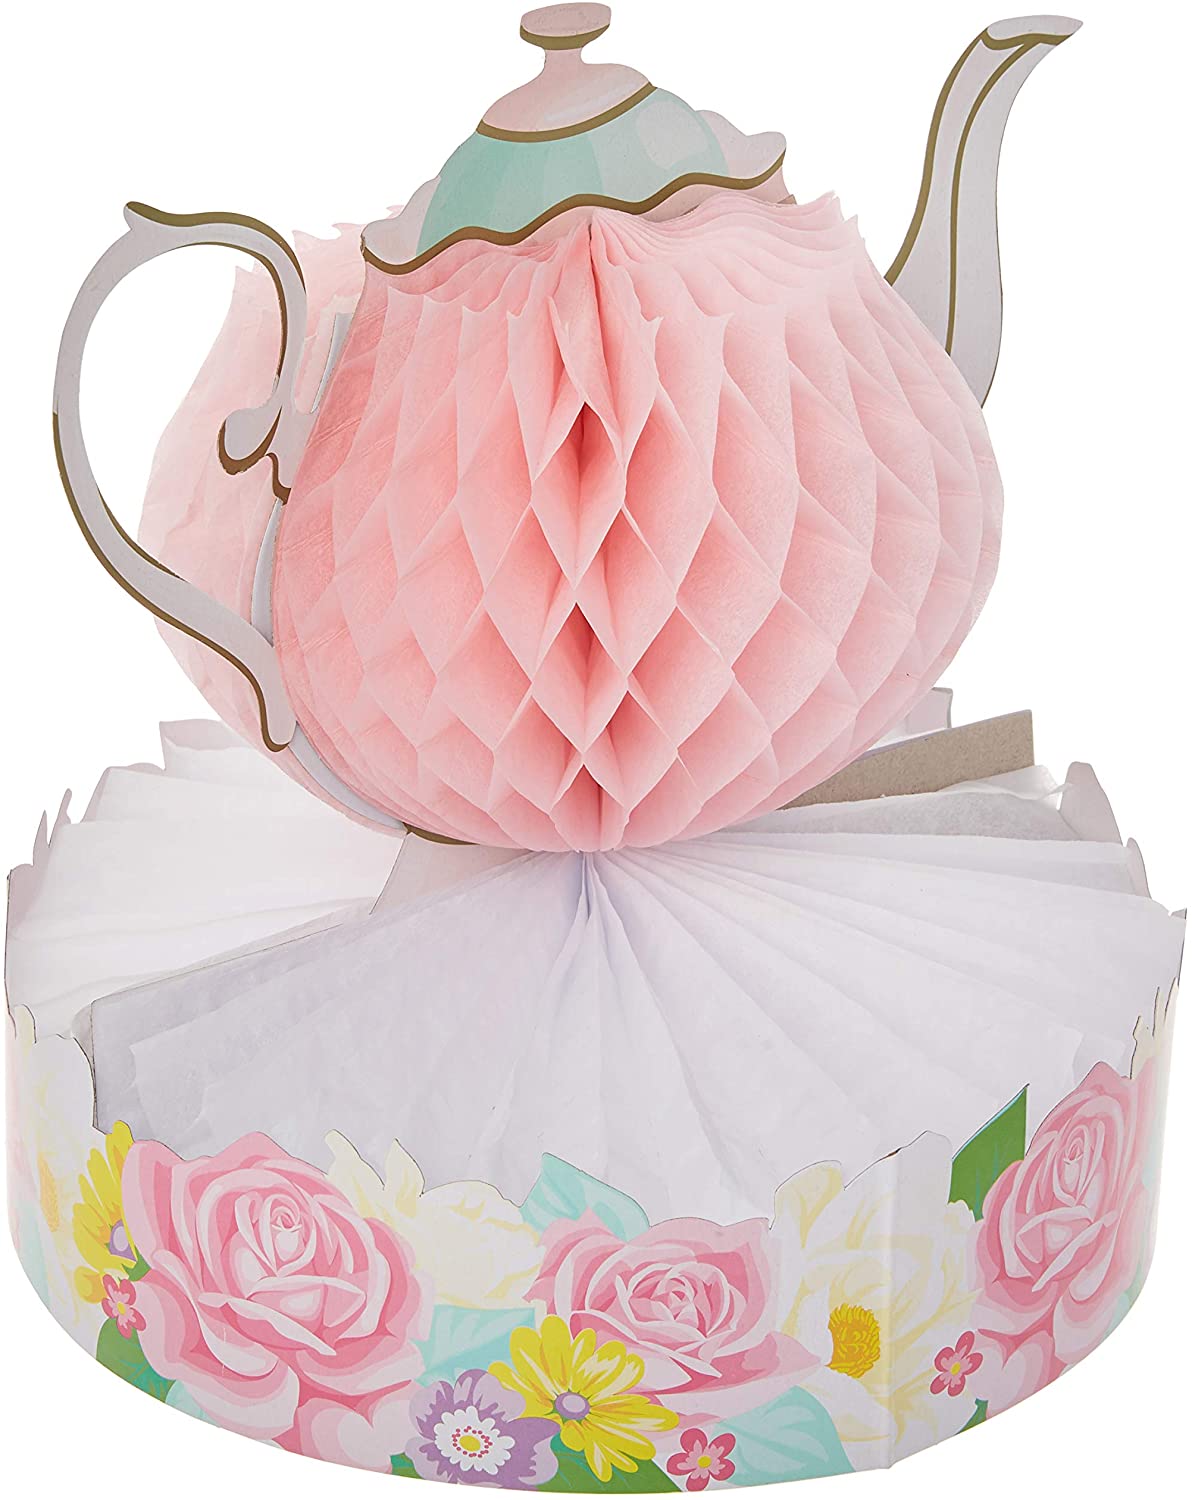 1 ct Floral Tea Party Plastic Tablecloth 